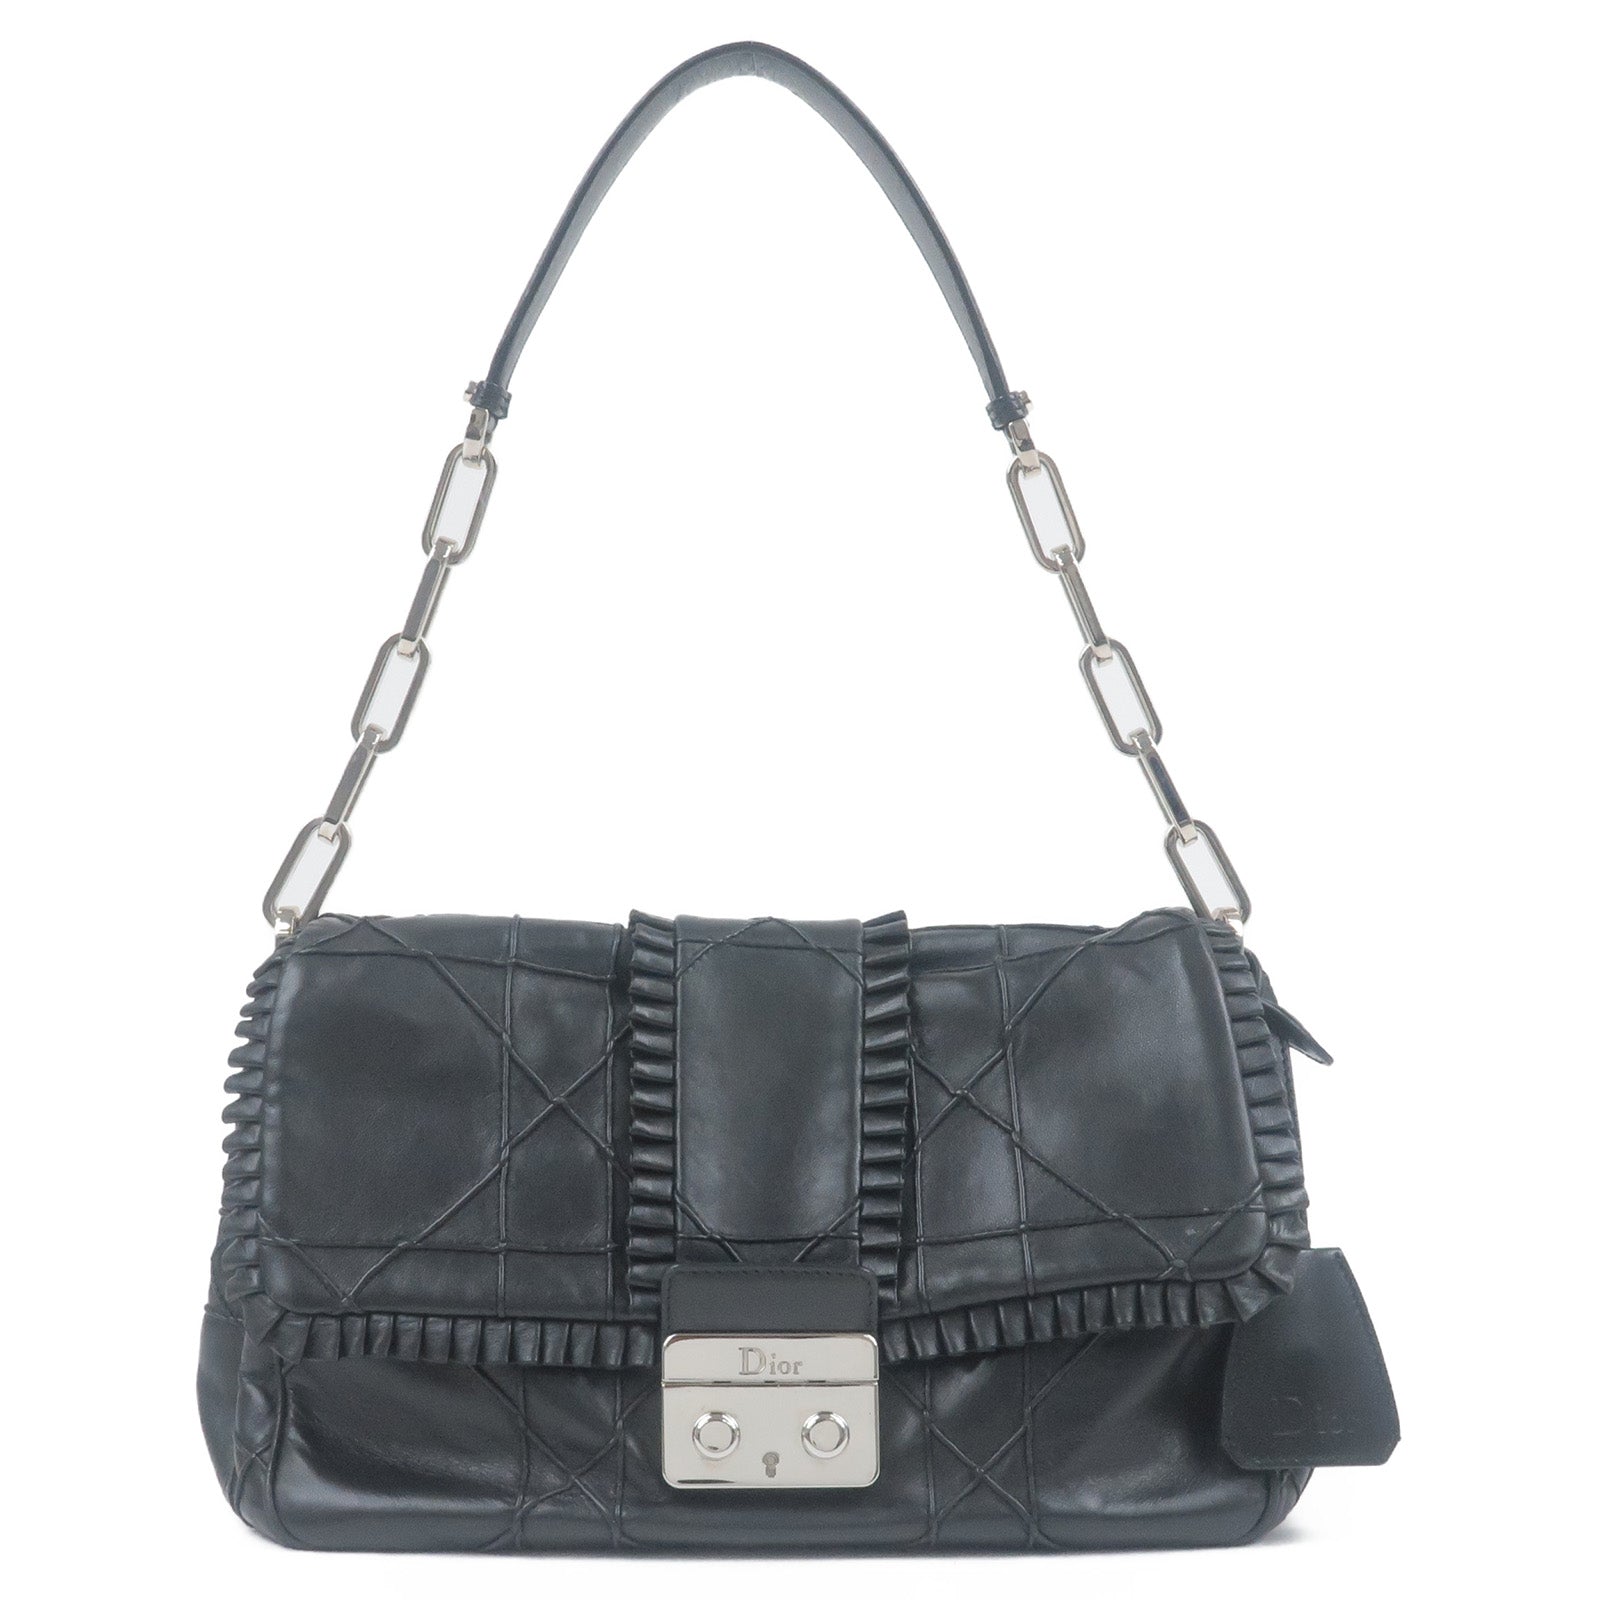 Christian-Dior-New-Lock-Cannage-Leather-Chain-Shoulder-Bag-Black